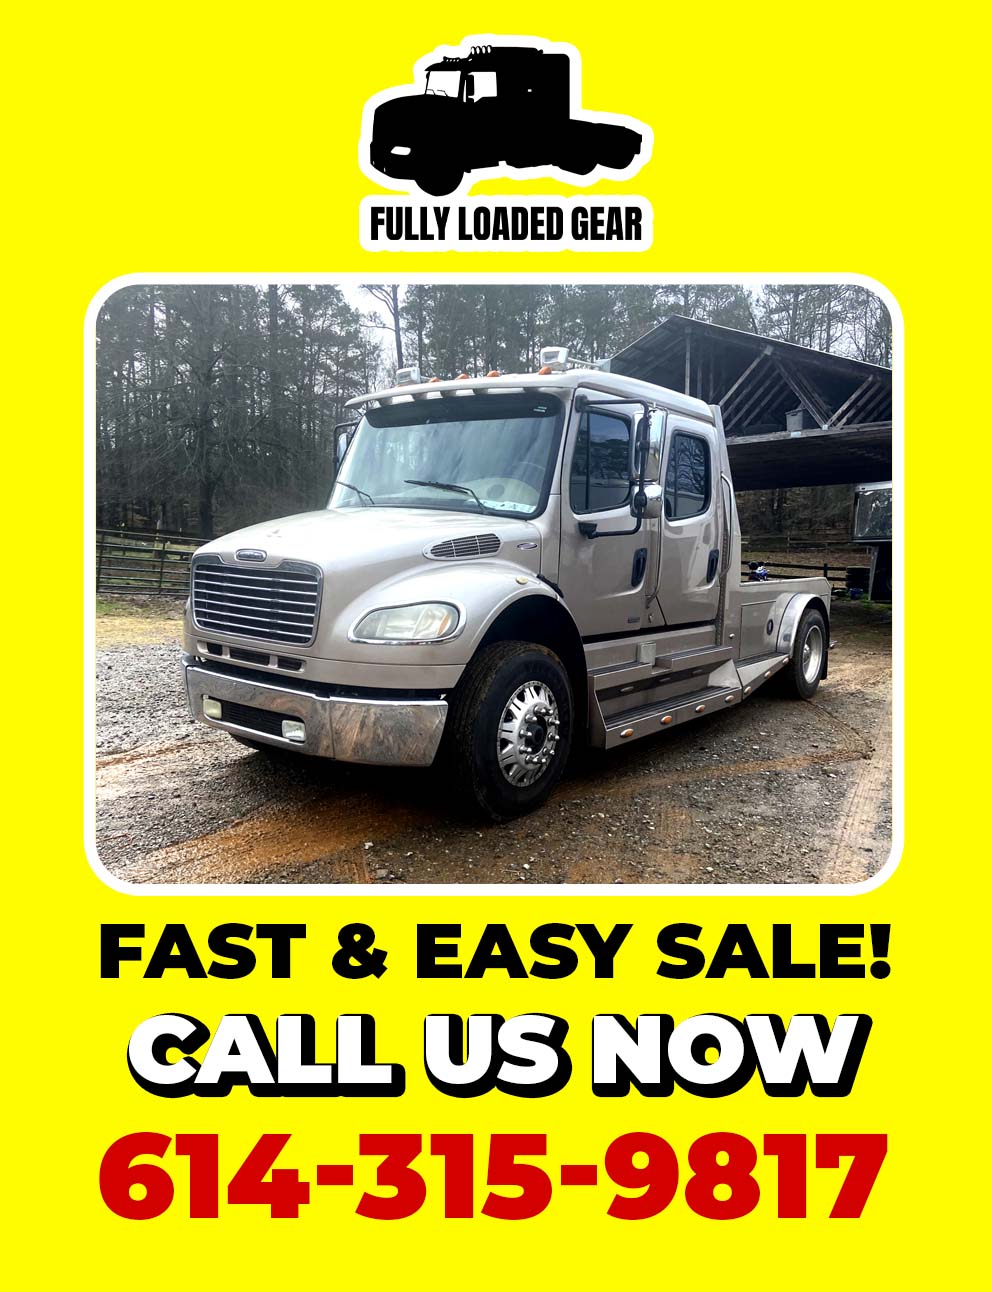 Fast & Easy Sale through Fully Loaded Gear